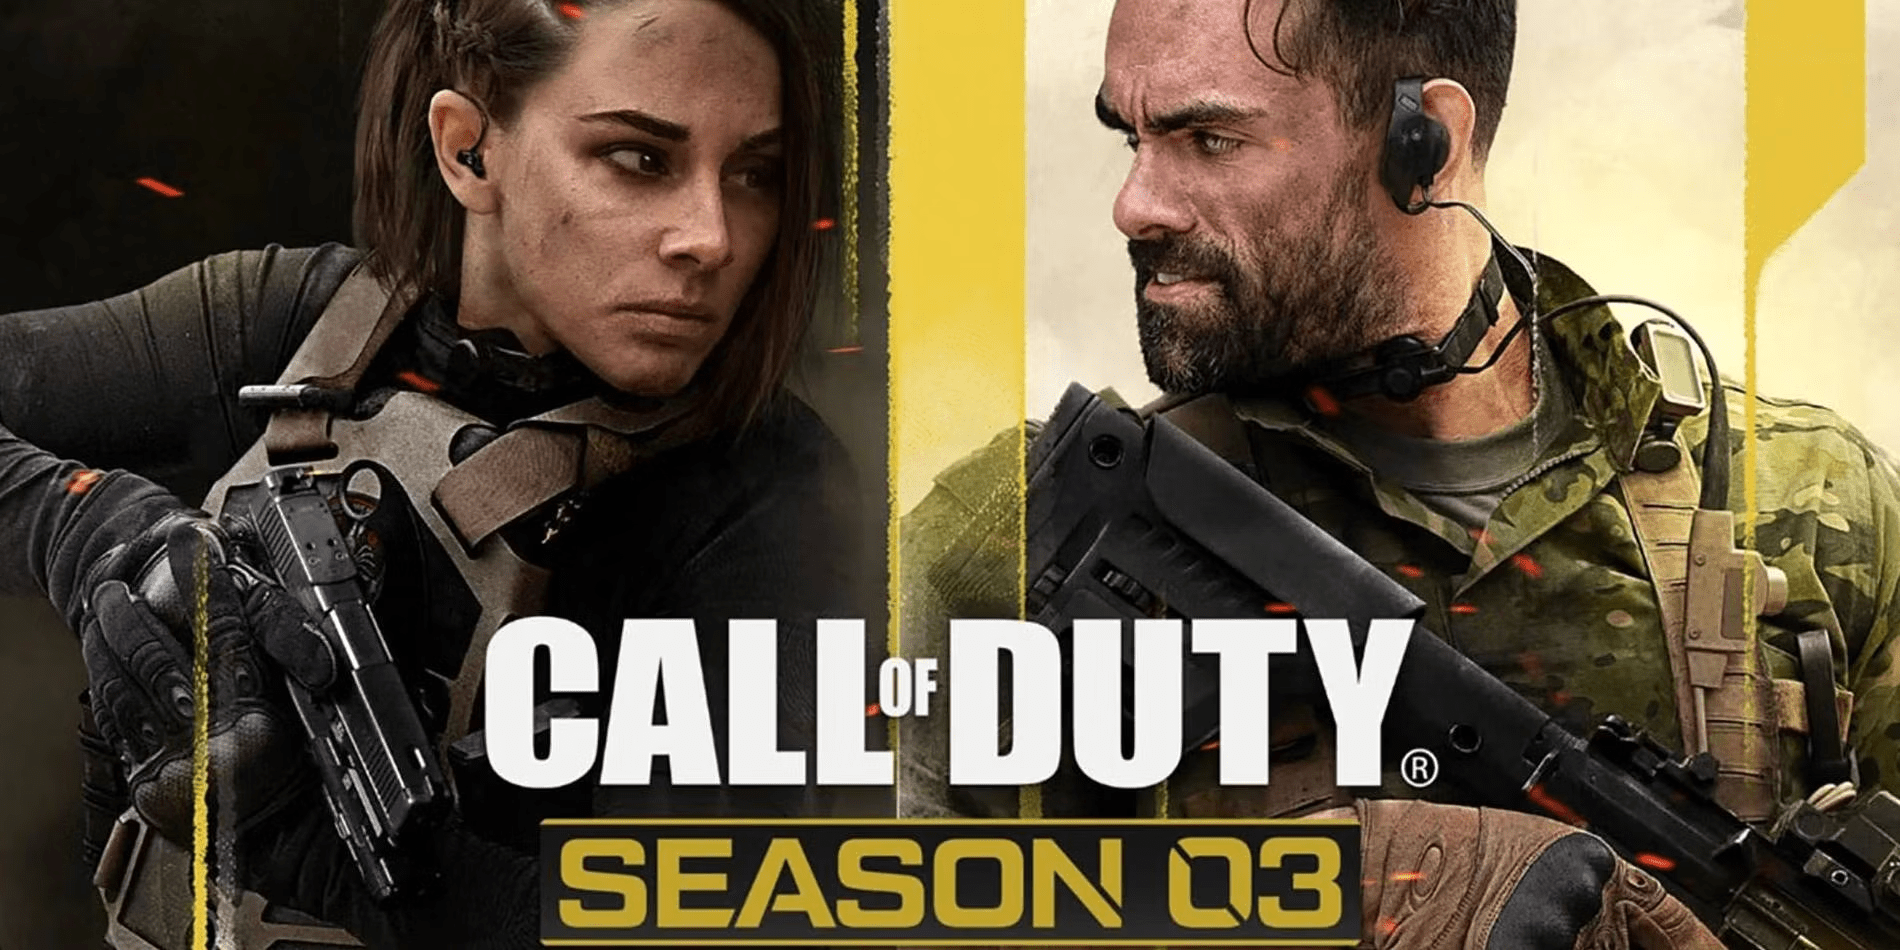 Call of Duty: Modern Warfare II e Warzone 2.0 - Trailer Pacote de